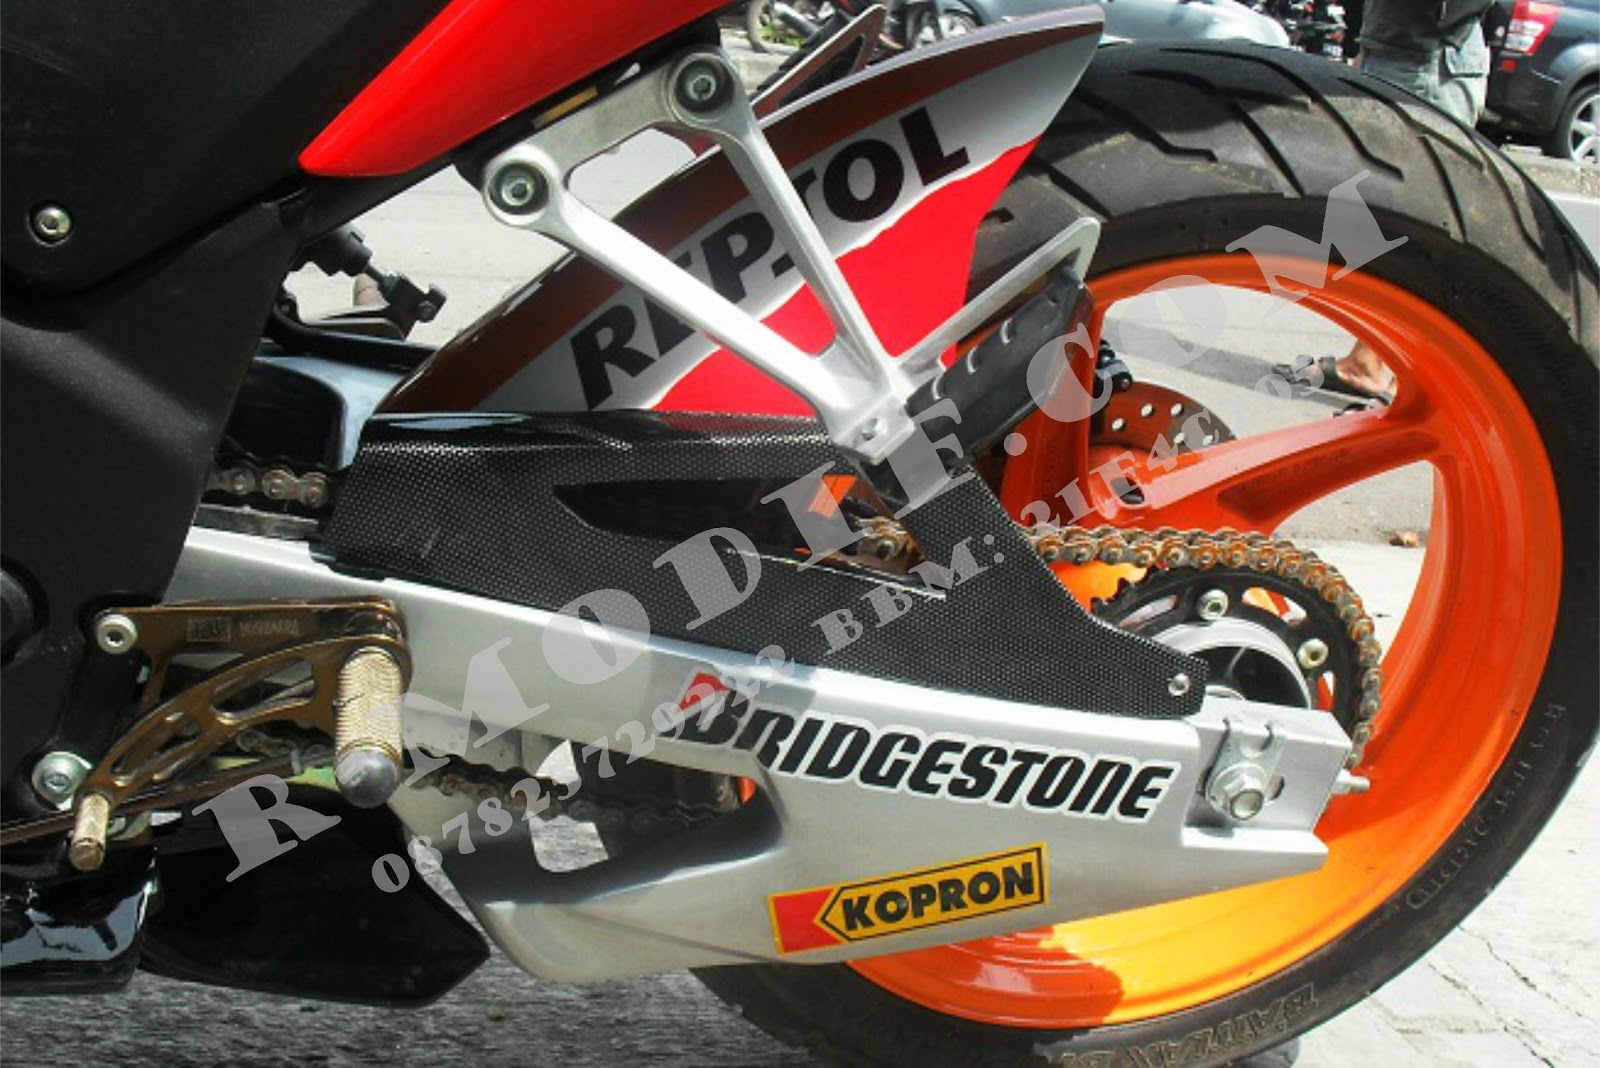 106 Foto Modifikasi Motor Cbr 150cc Modifikasi Motor Honda CB Terbaru